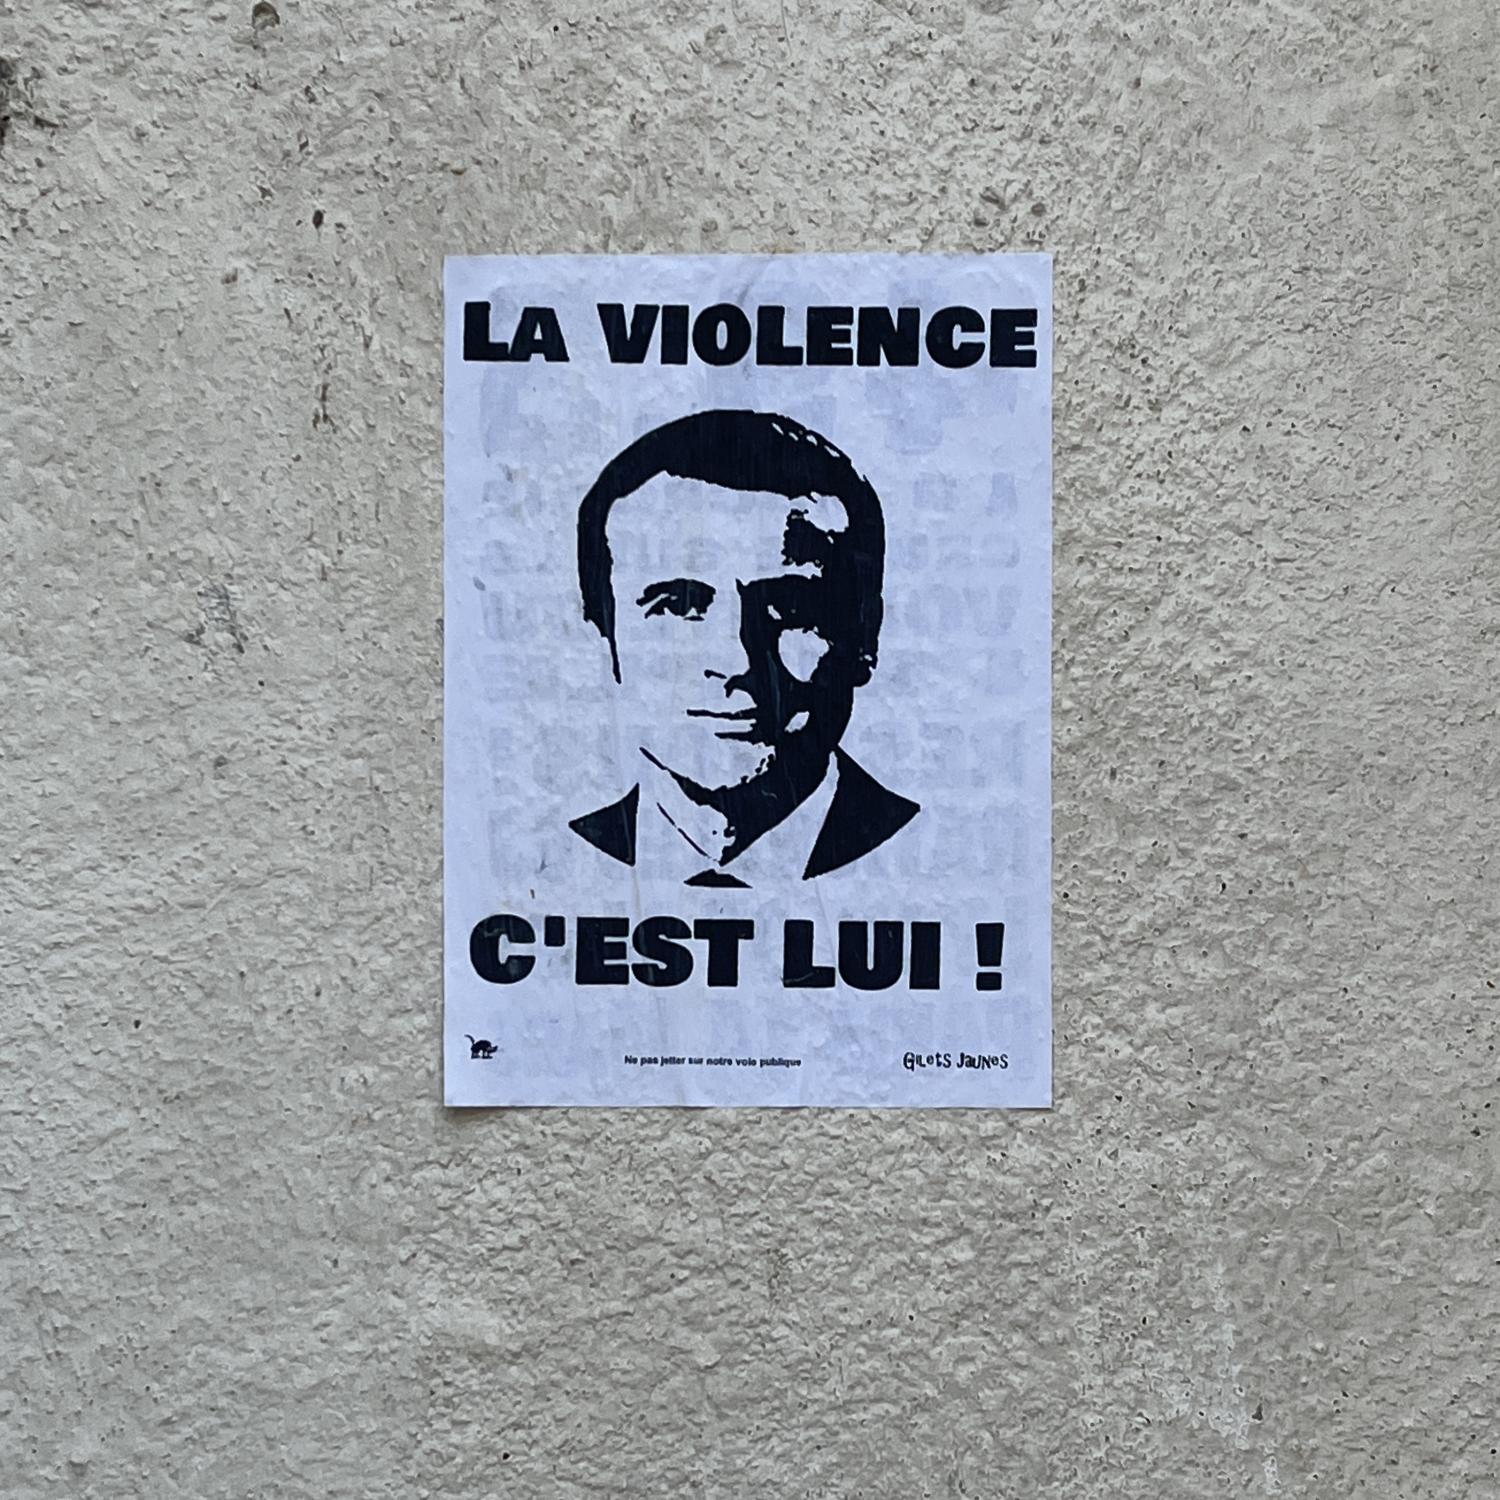 "La violence, c'est lui !"